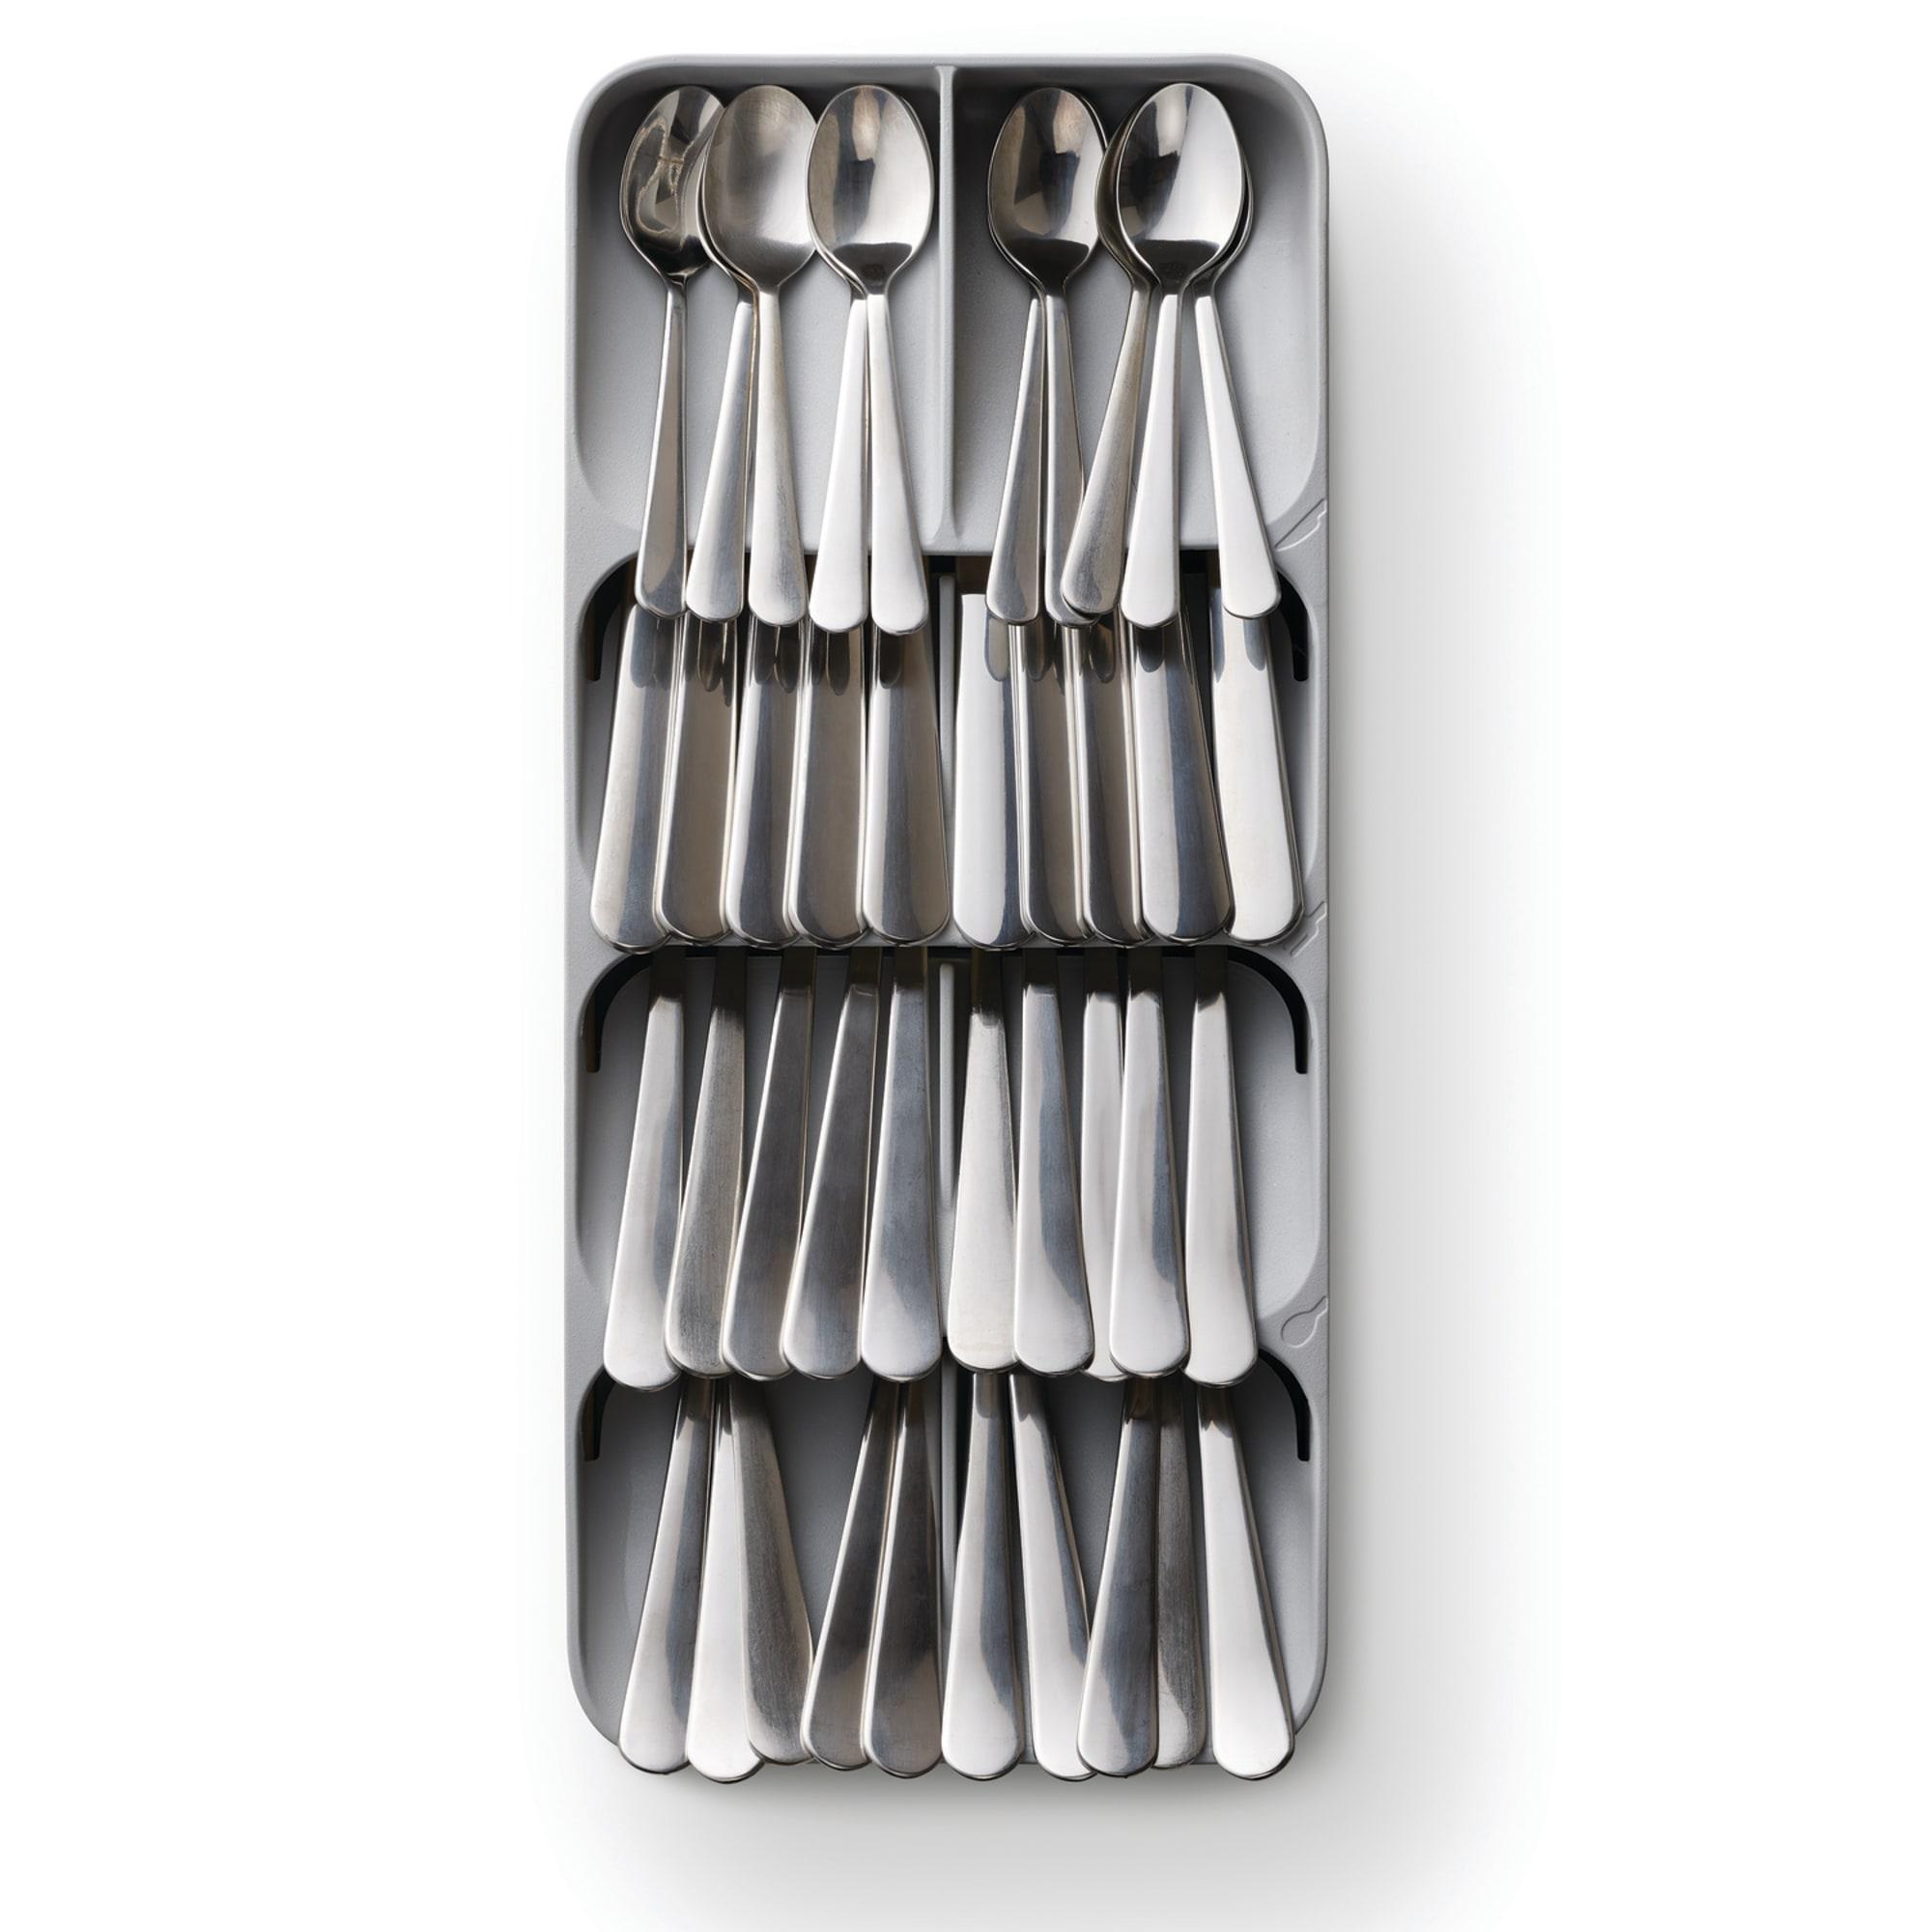 Joseph Joseph DrawerStore Compact Cutlery Organiser Large Grey Image 3